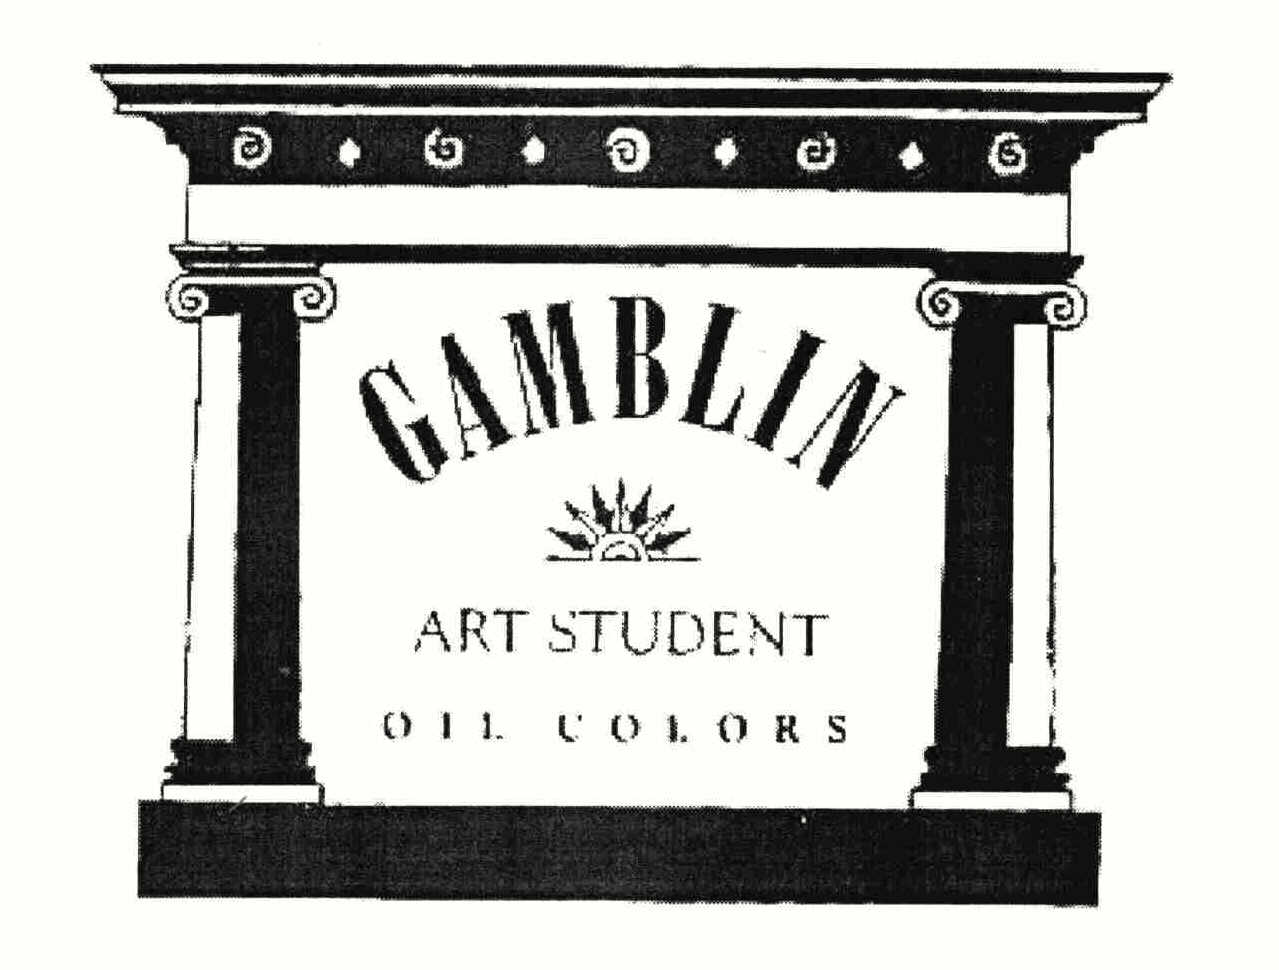  GAMBLIN ART STUDENT OIL COLORS